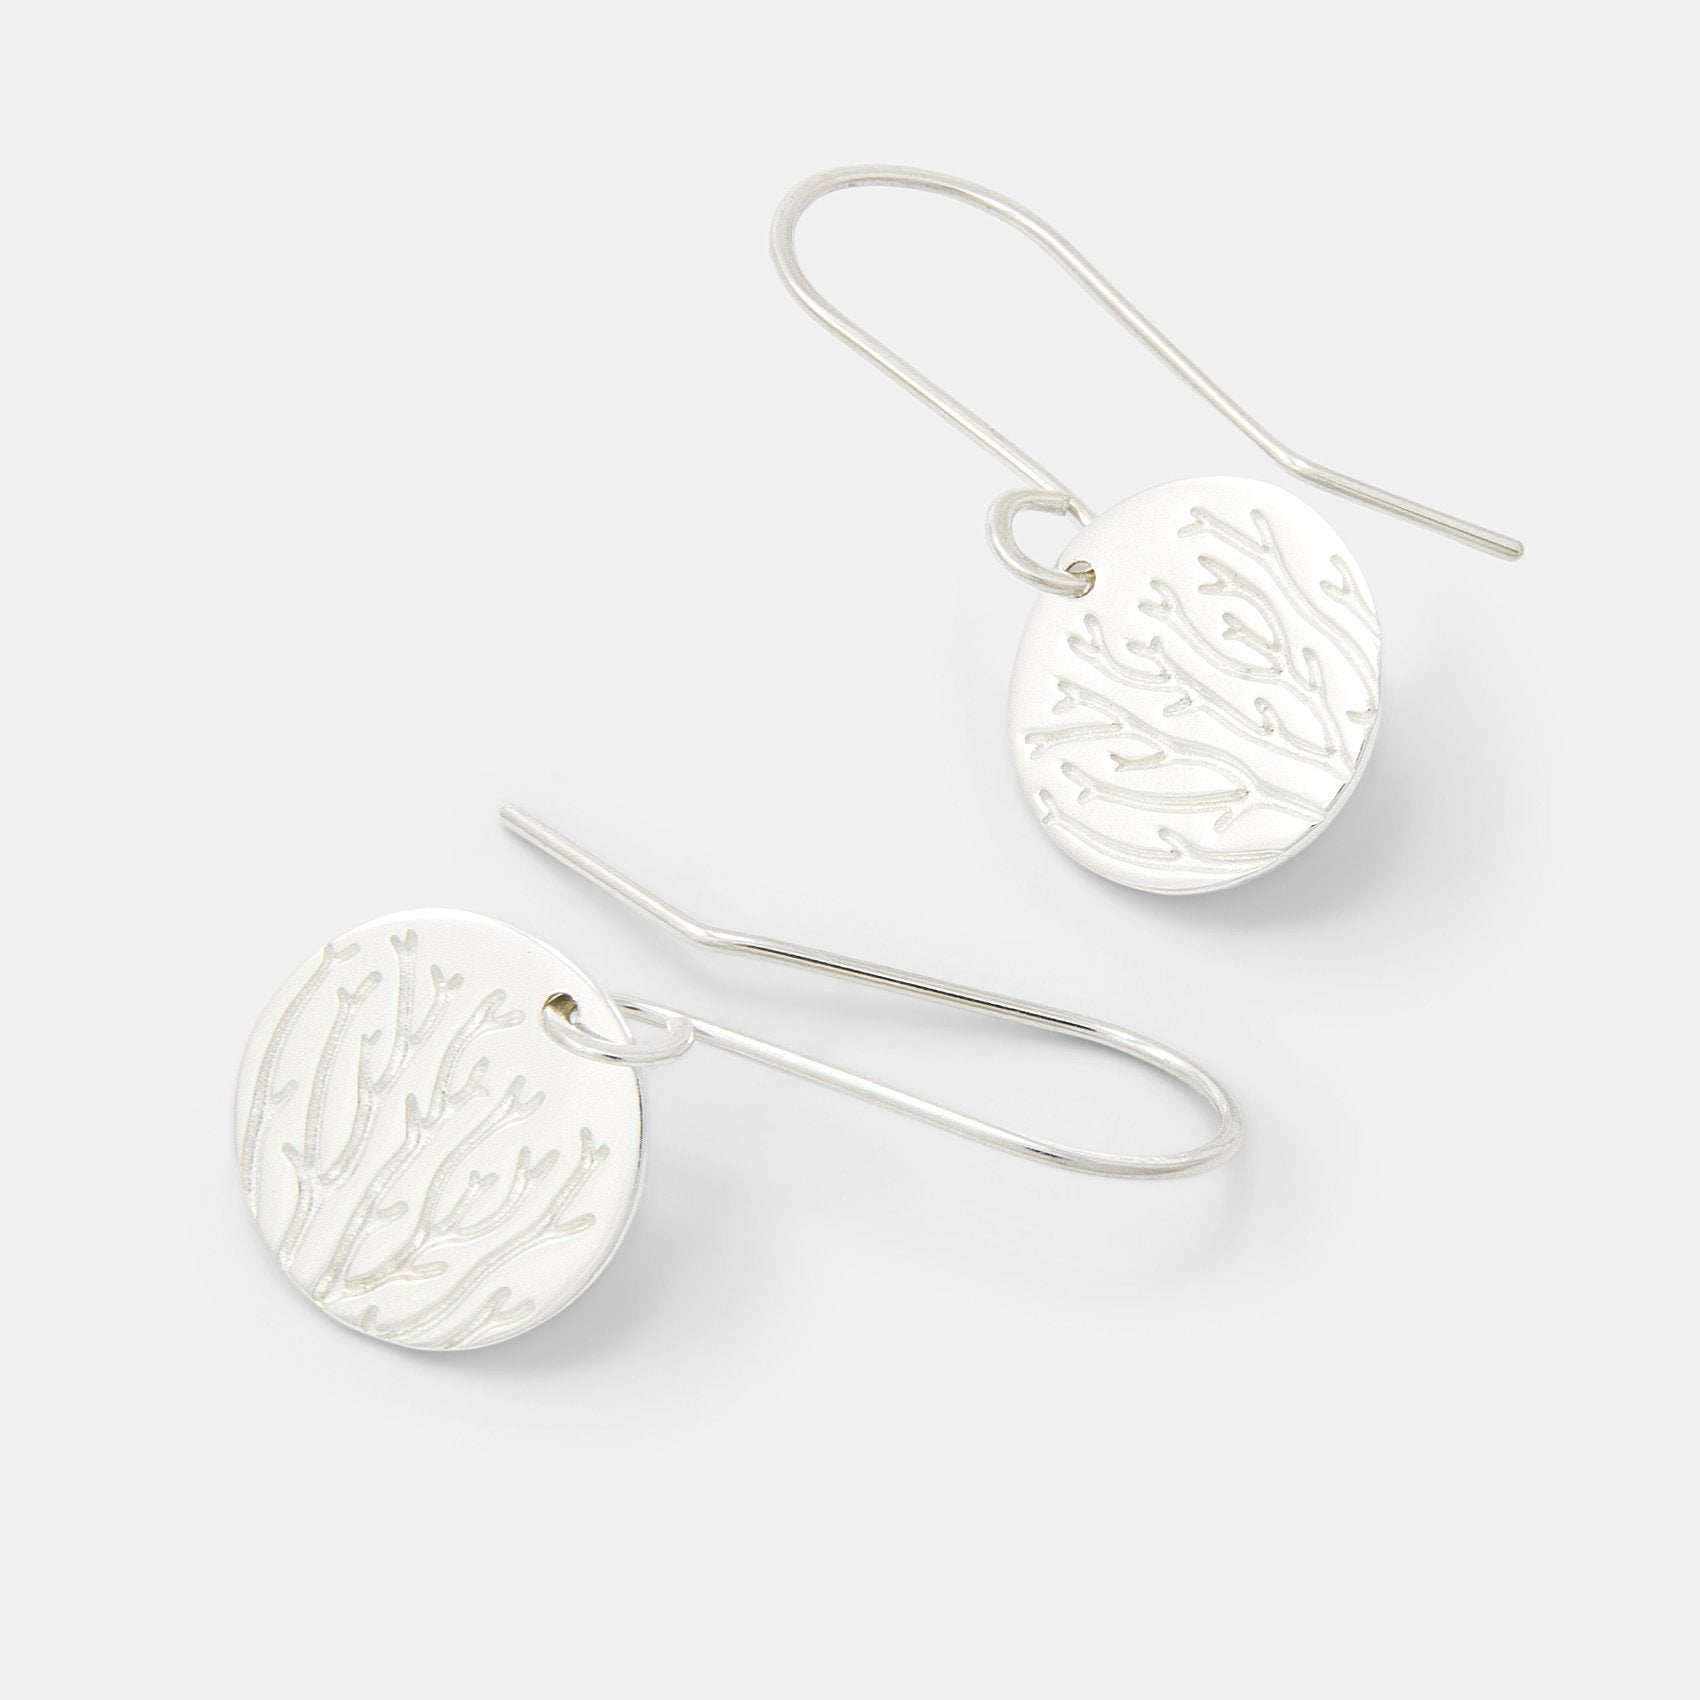 Seagrass texture silver drop earrings - Simone Walsh Jewellery Australia